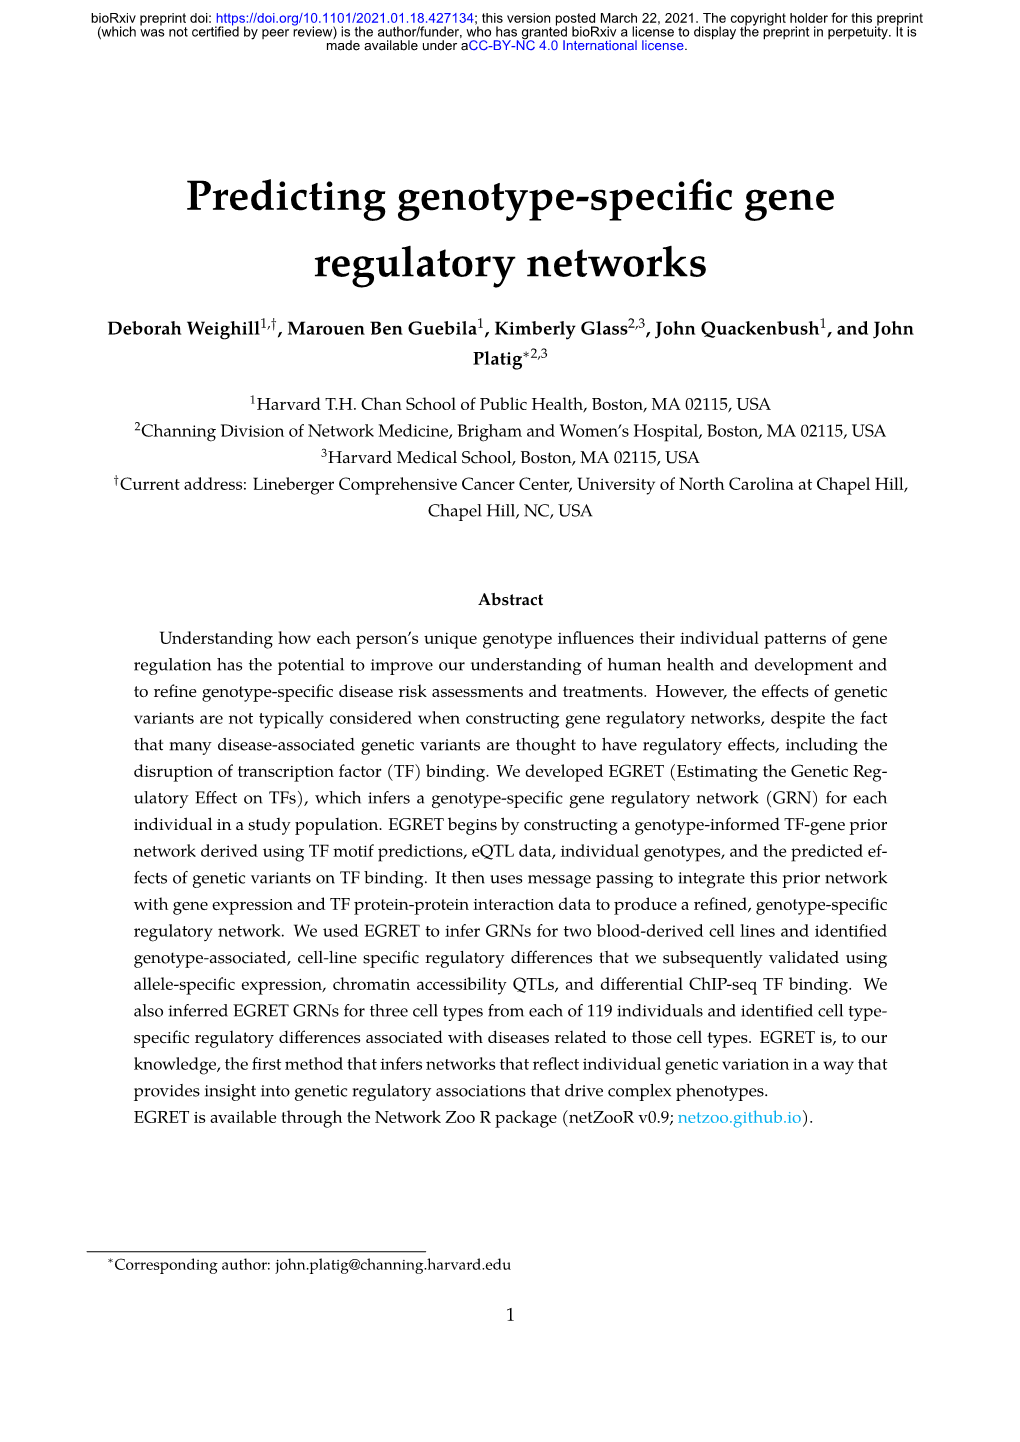 Predicting Genotype-Specific Gene Regulatory Networks